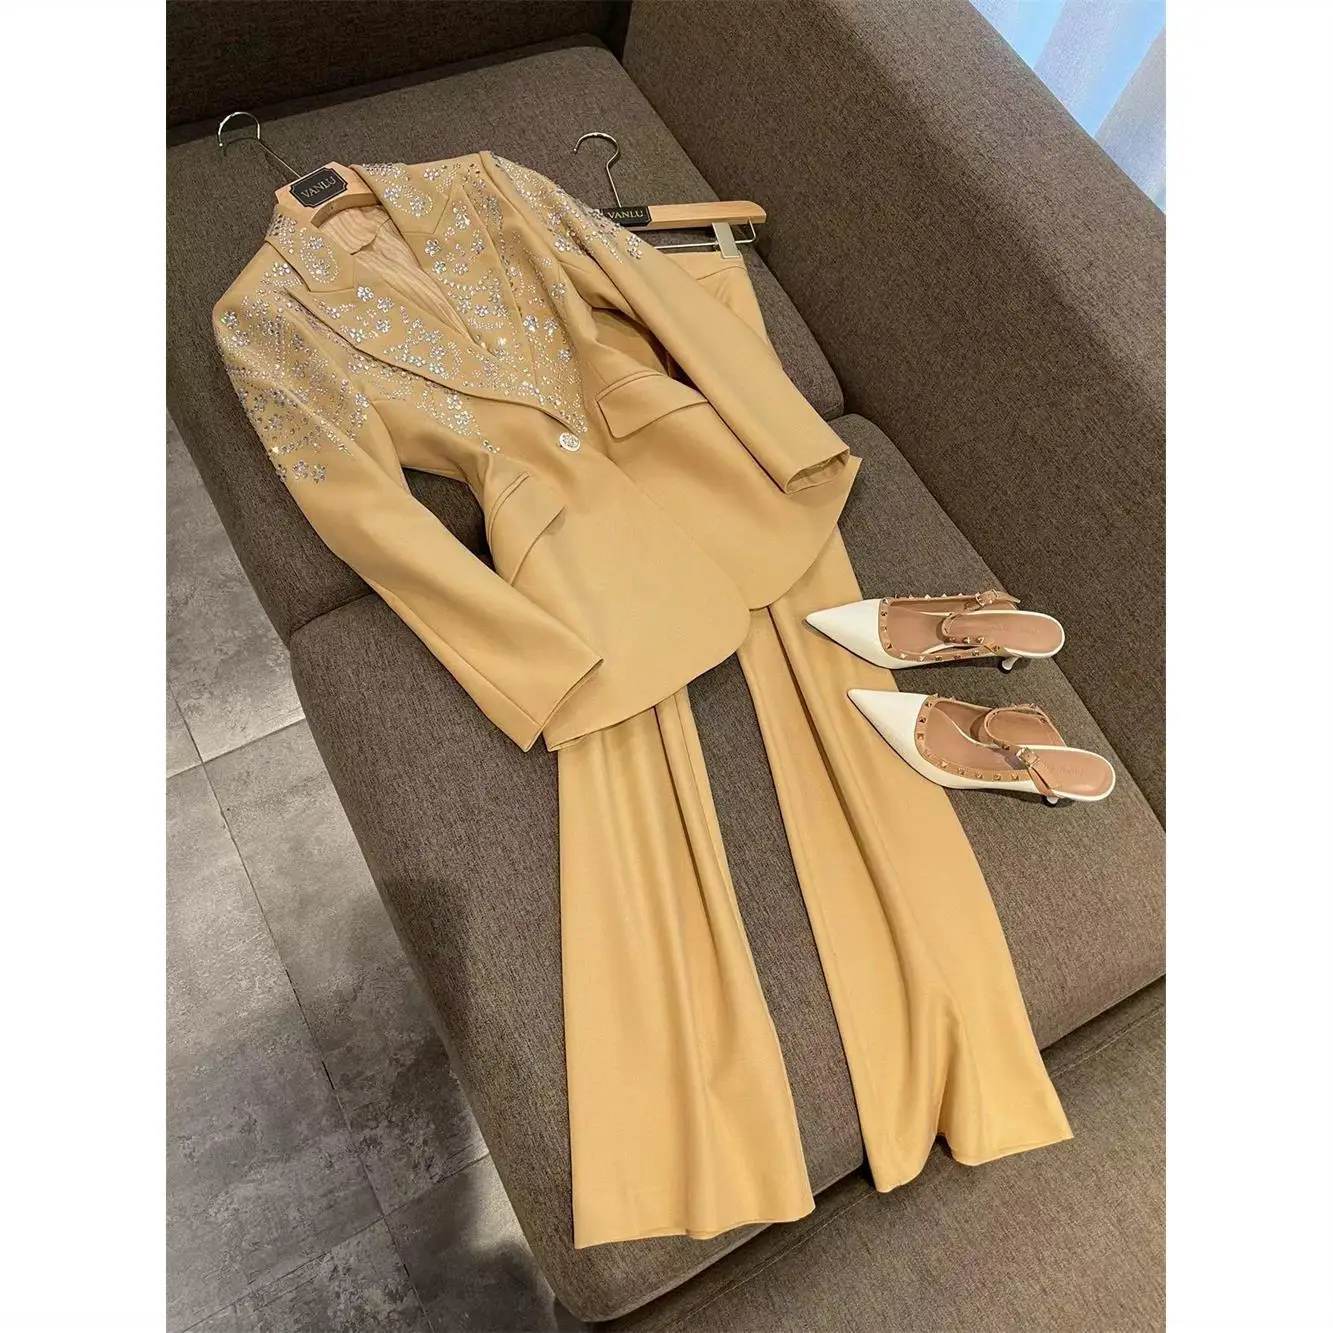 Luxury Rhinestone Beaded Turn Down Collar Blazers Coat OL Slim Waist Diamonds Suit Cardigan Beaded Tops+Wide Legs Pants 2pcs Set images - 6